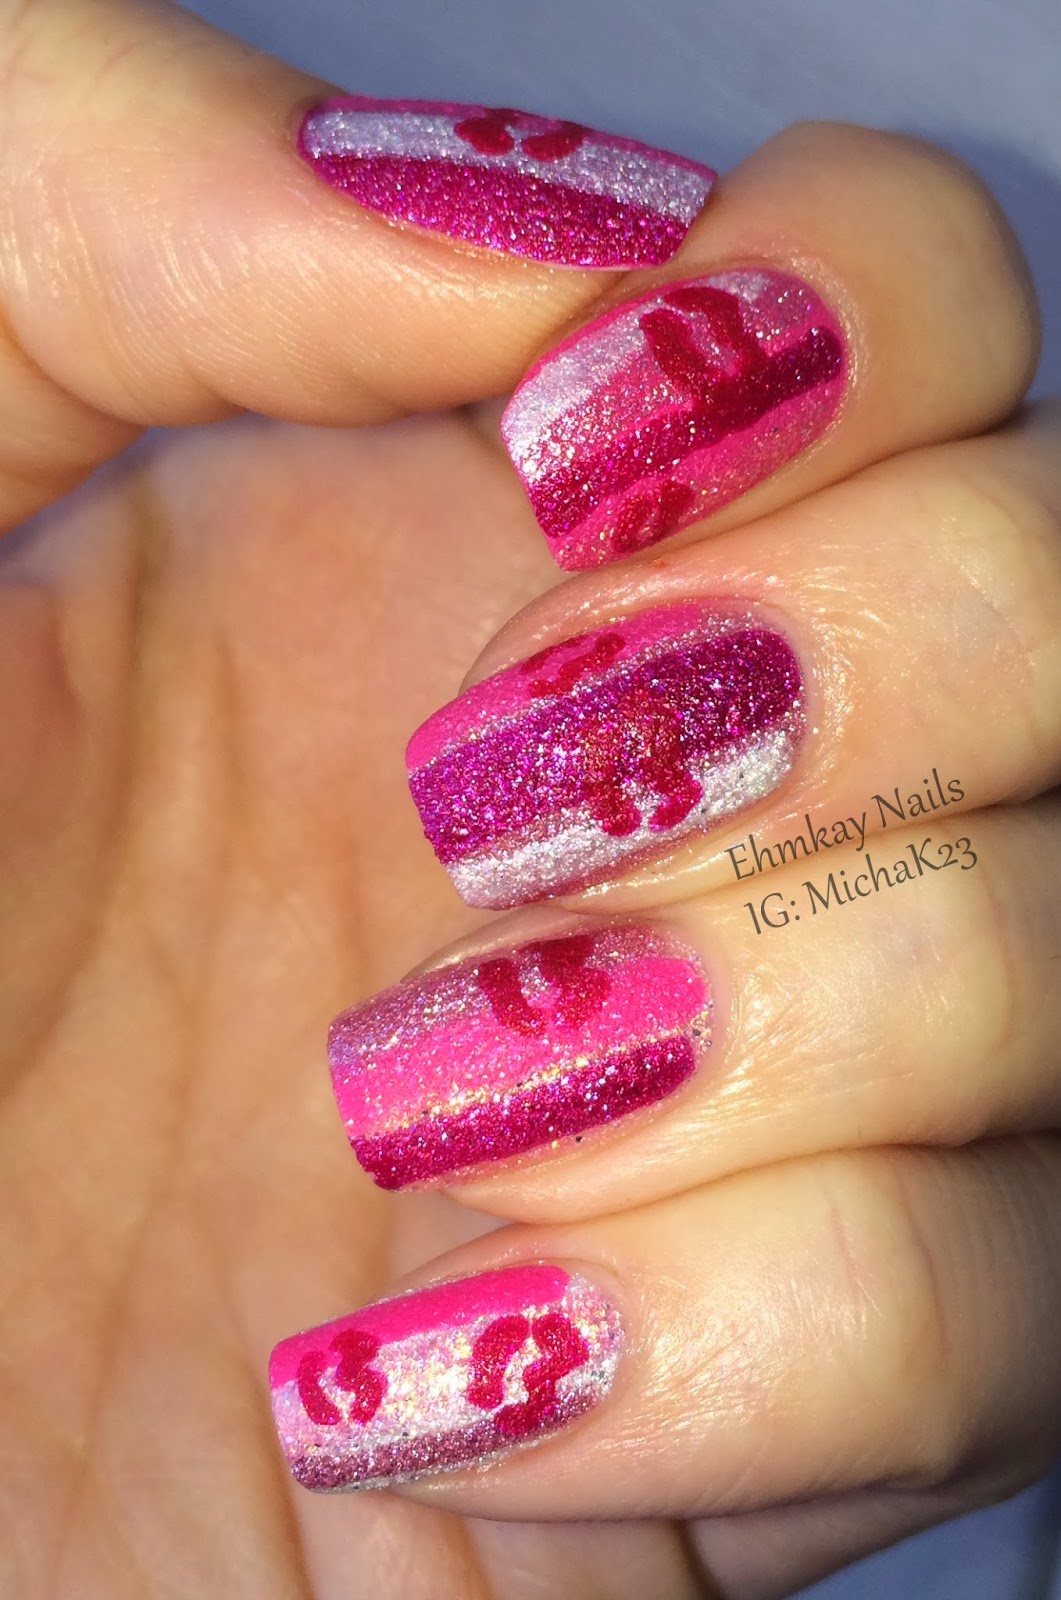 ehmkay nails Valentine's Day Nail Art Texture Stripes and Kisses